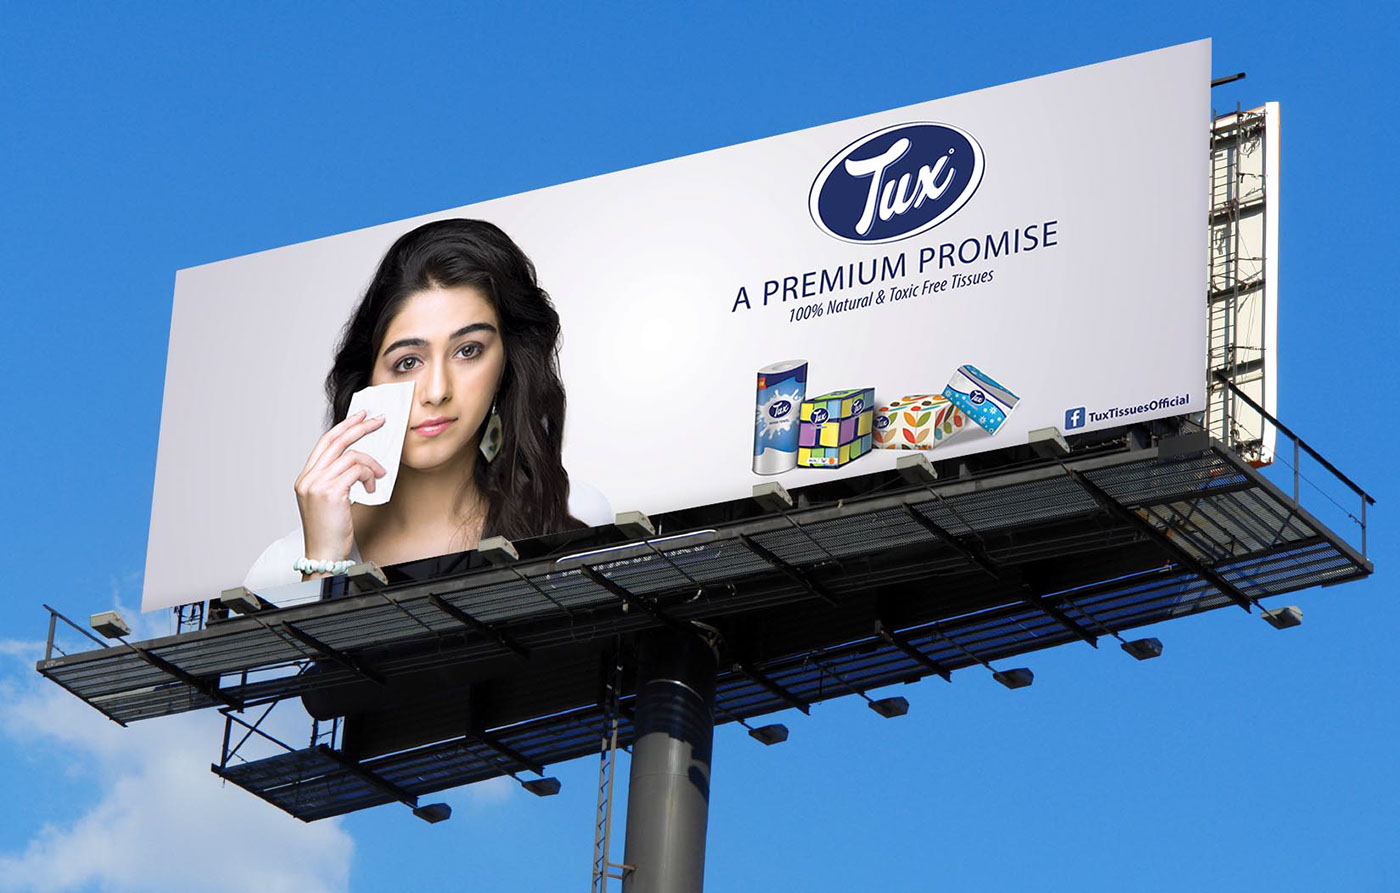 tux tissues ooh advertising  Billboards Ramzan offer Launch Campaign Premium tissues